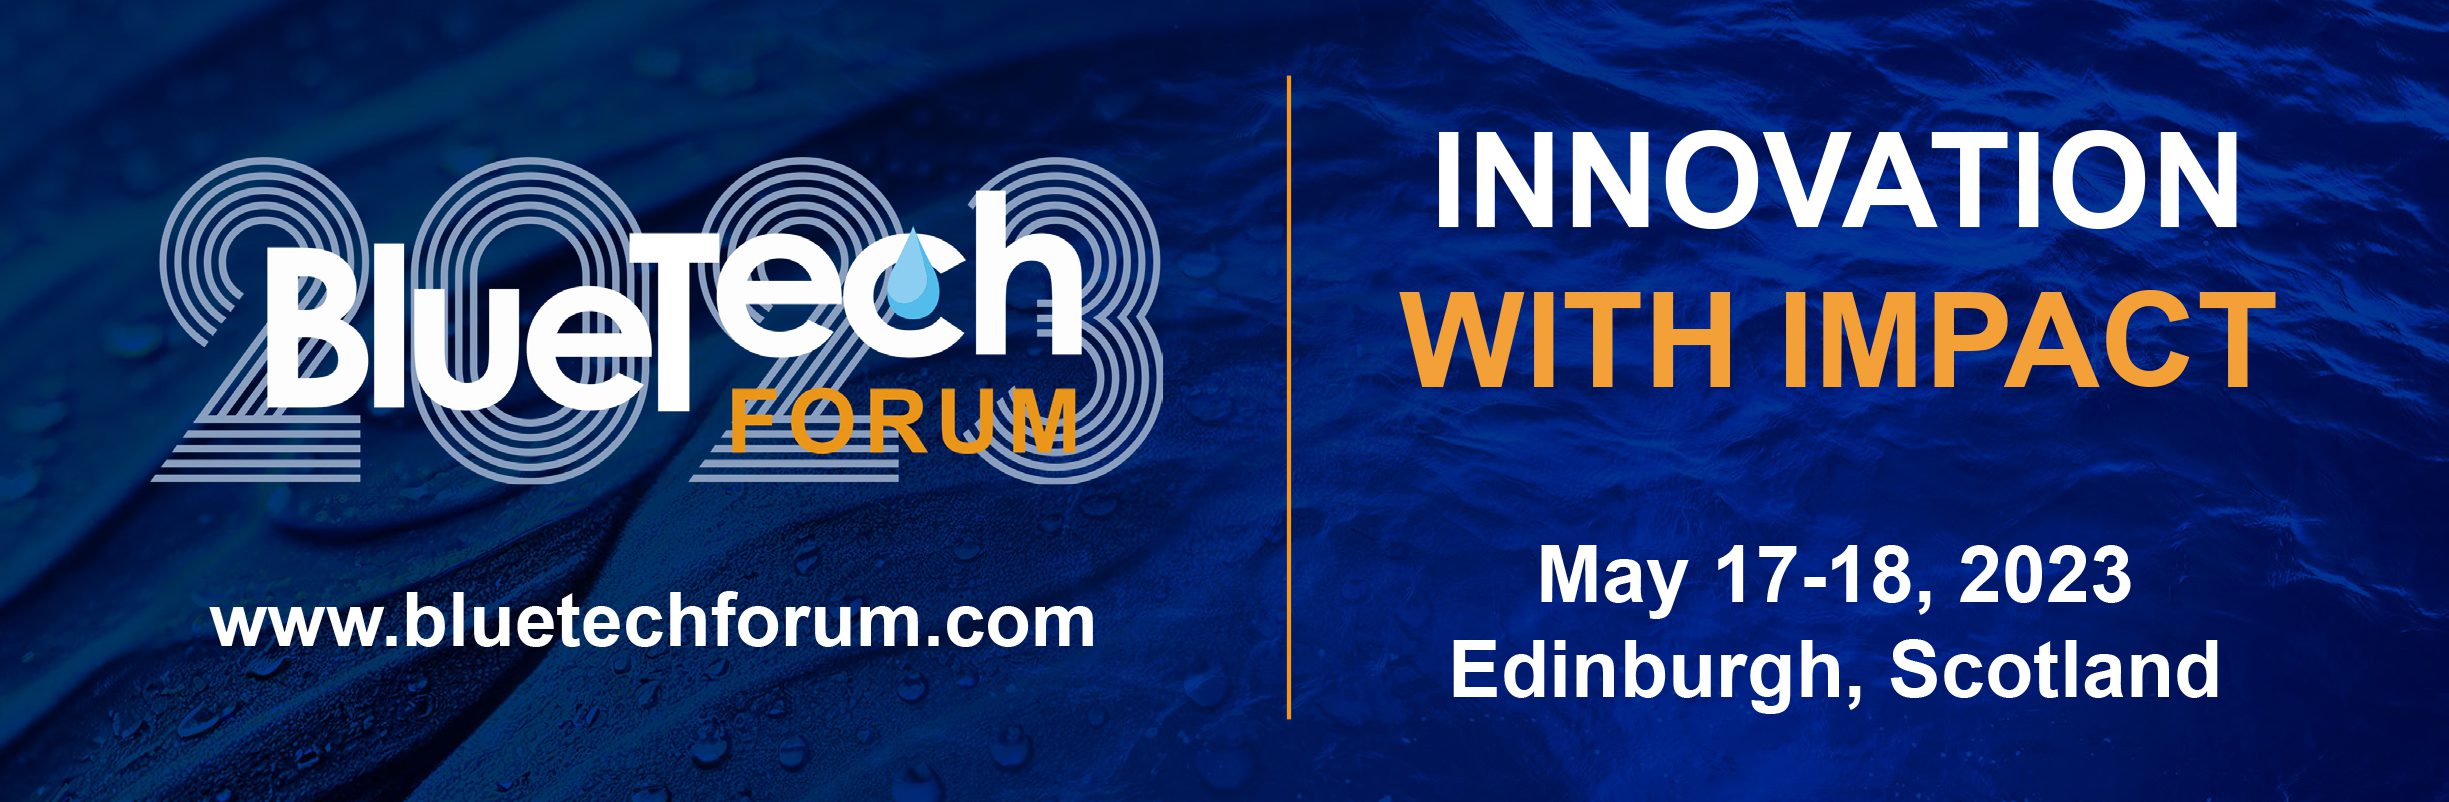 Cleantech Forum Europe, Live in Edinburgh